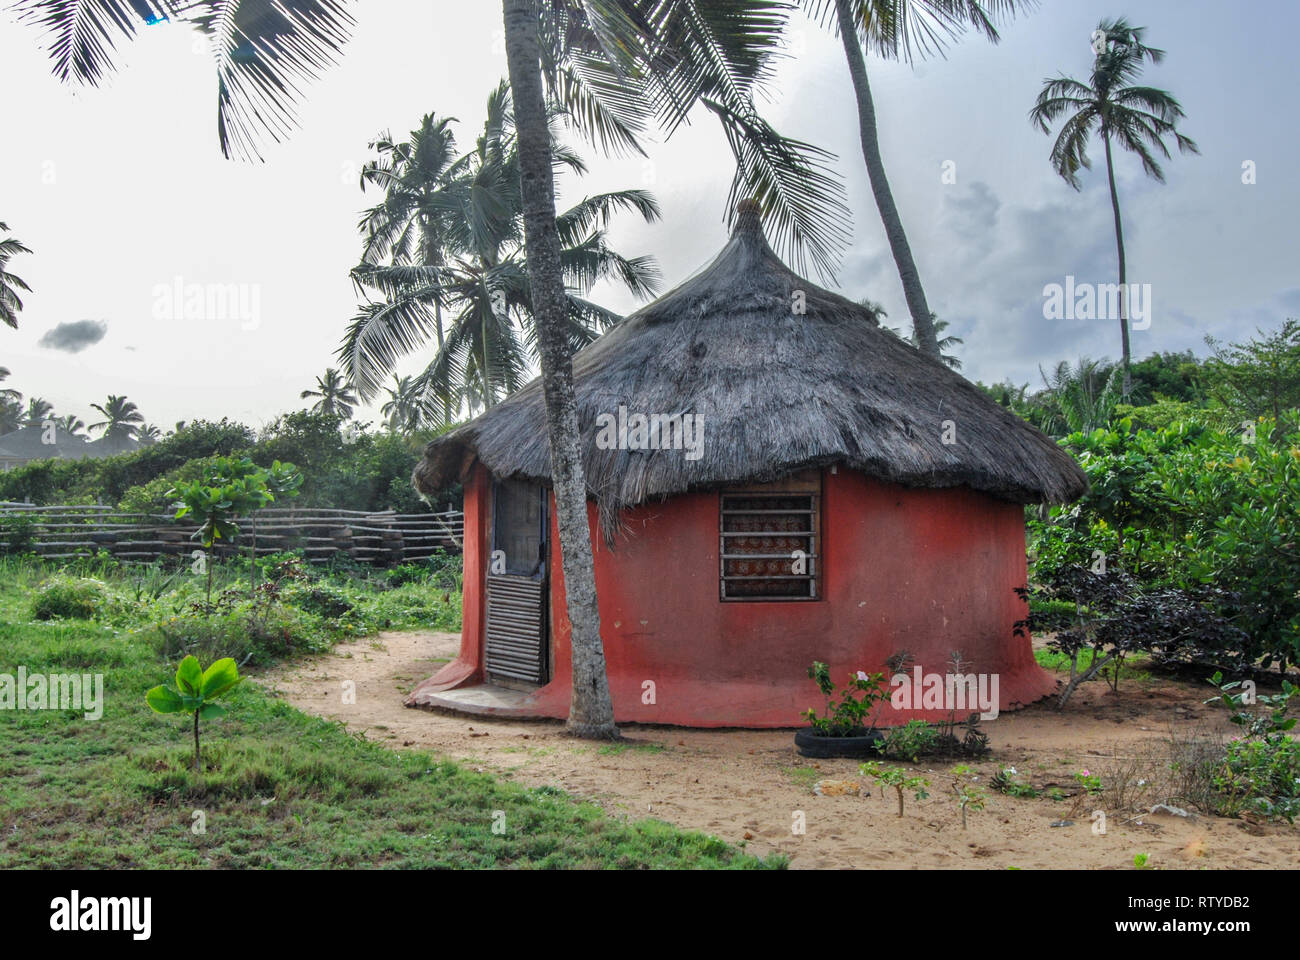 A nice yurt in the tropical forest at the Stumble inn eco lodge near the coastal town of Elmina, Ghana. Stock Photo